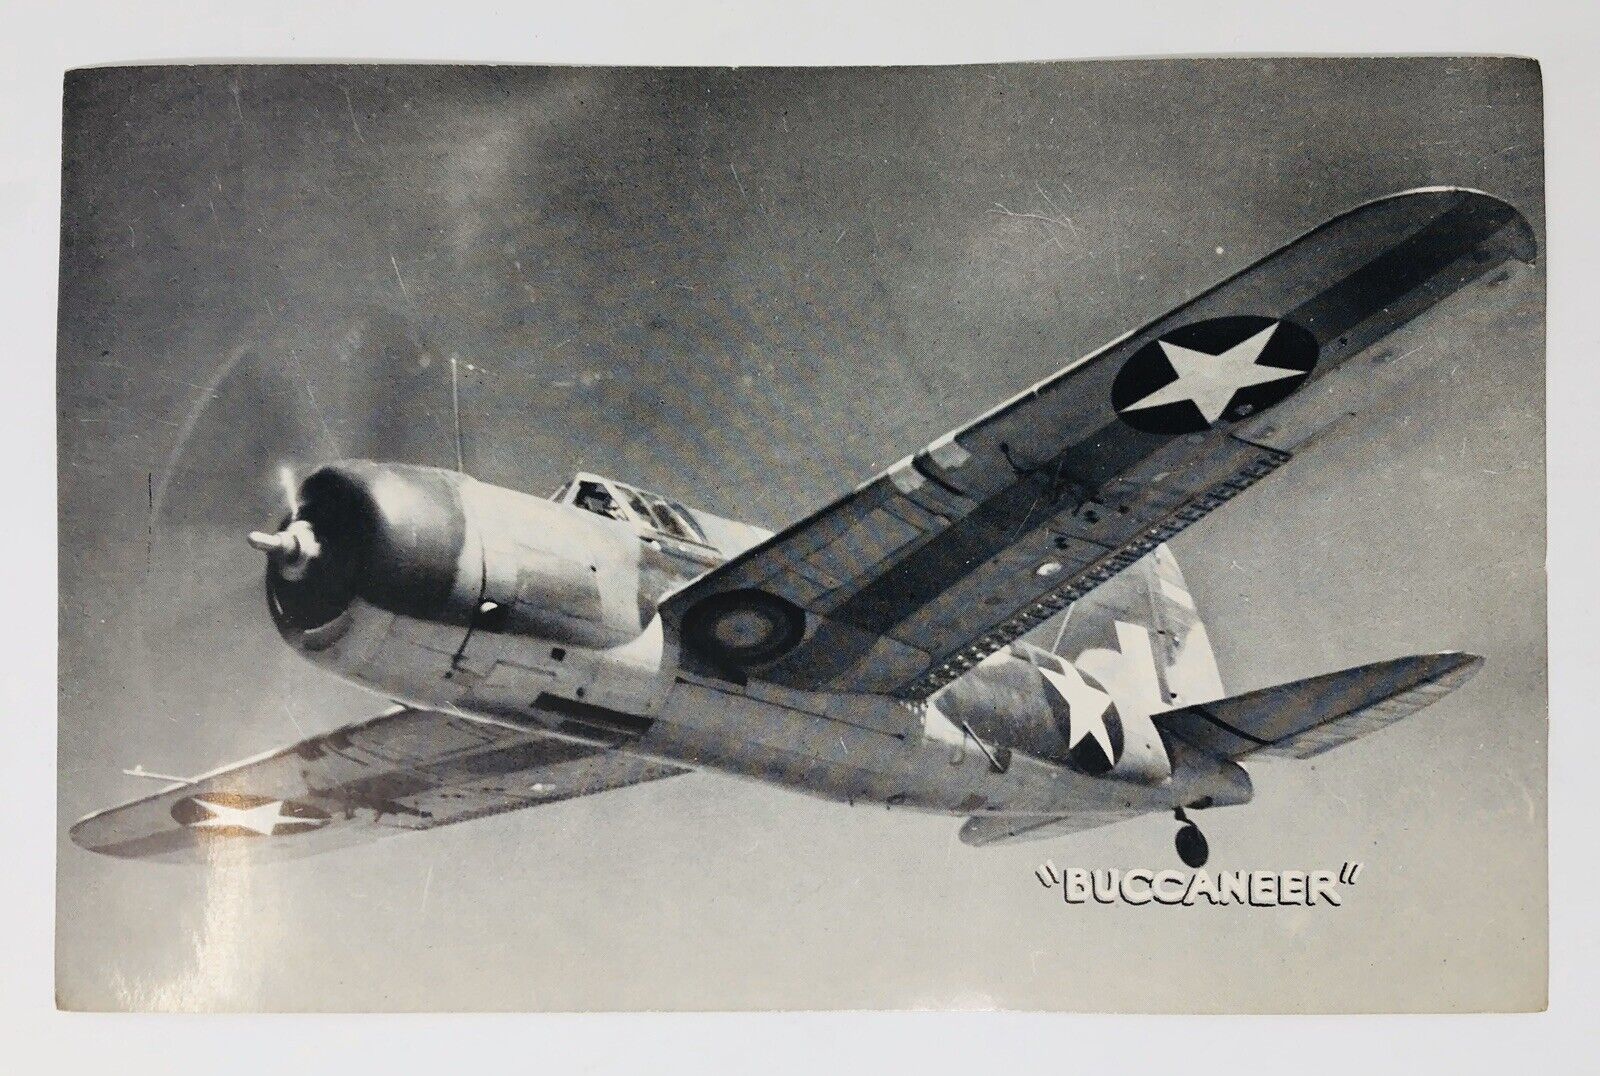 Original Vintage “Buccaneer” WWII Photo Card Black & White 8”x5” Aircraft Plane